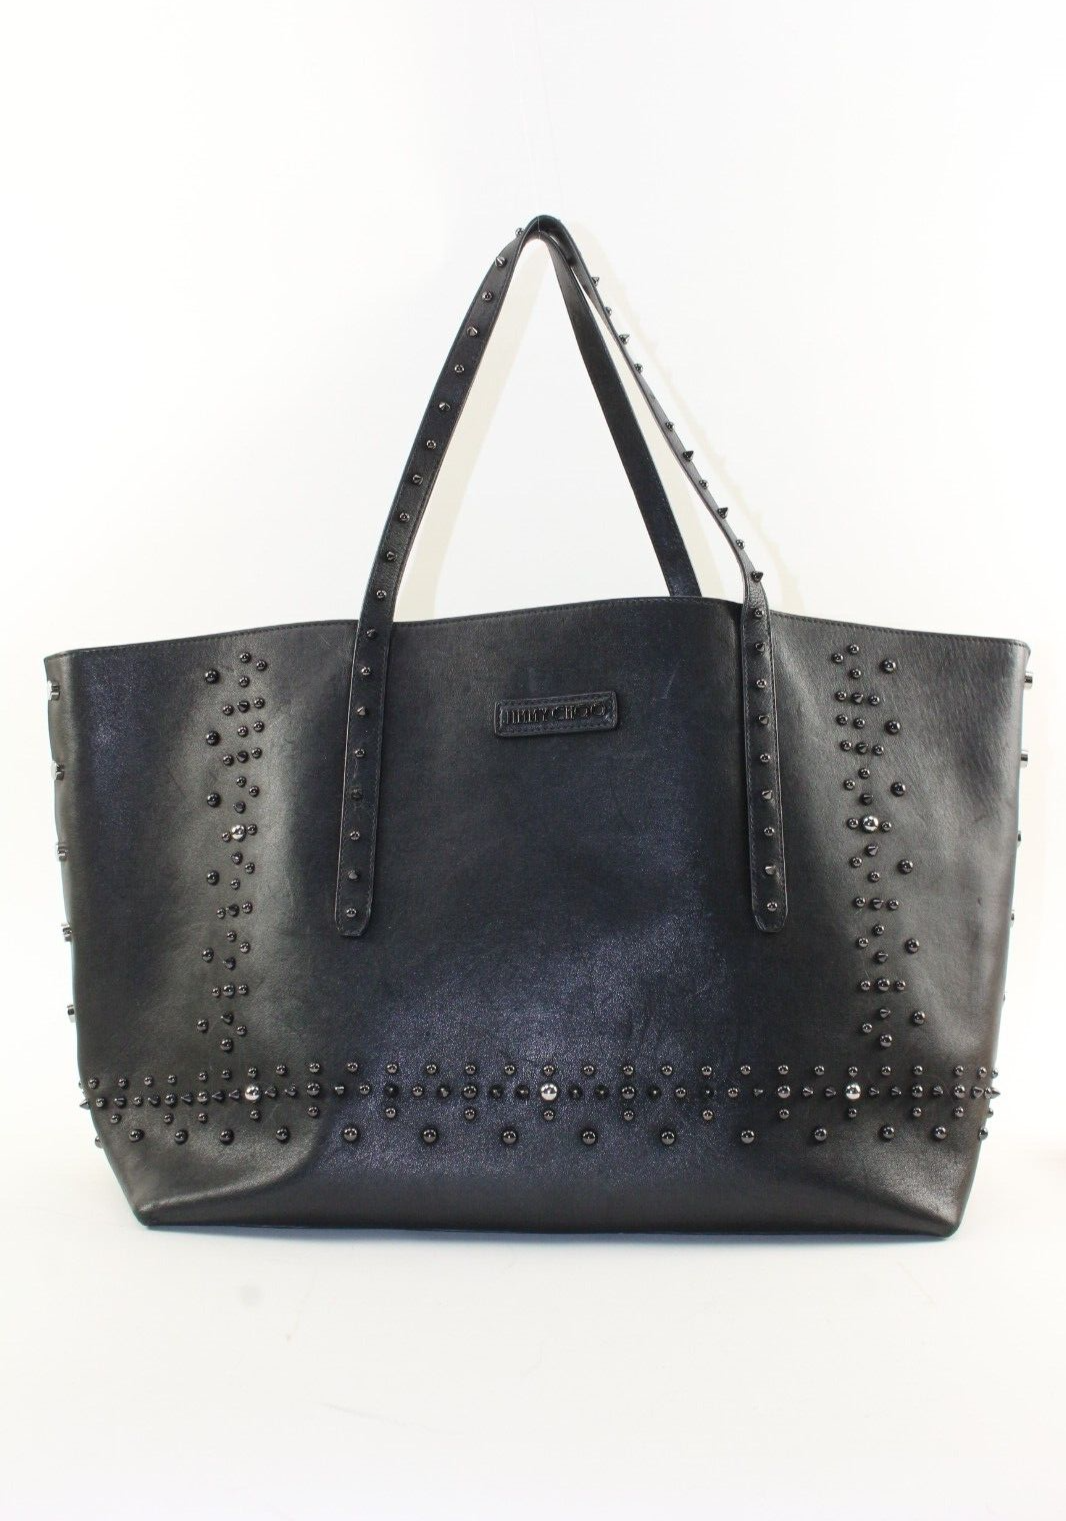 Jimmy Choo Bags & Handbags for Women for sale | eBay